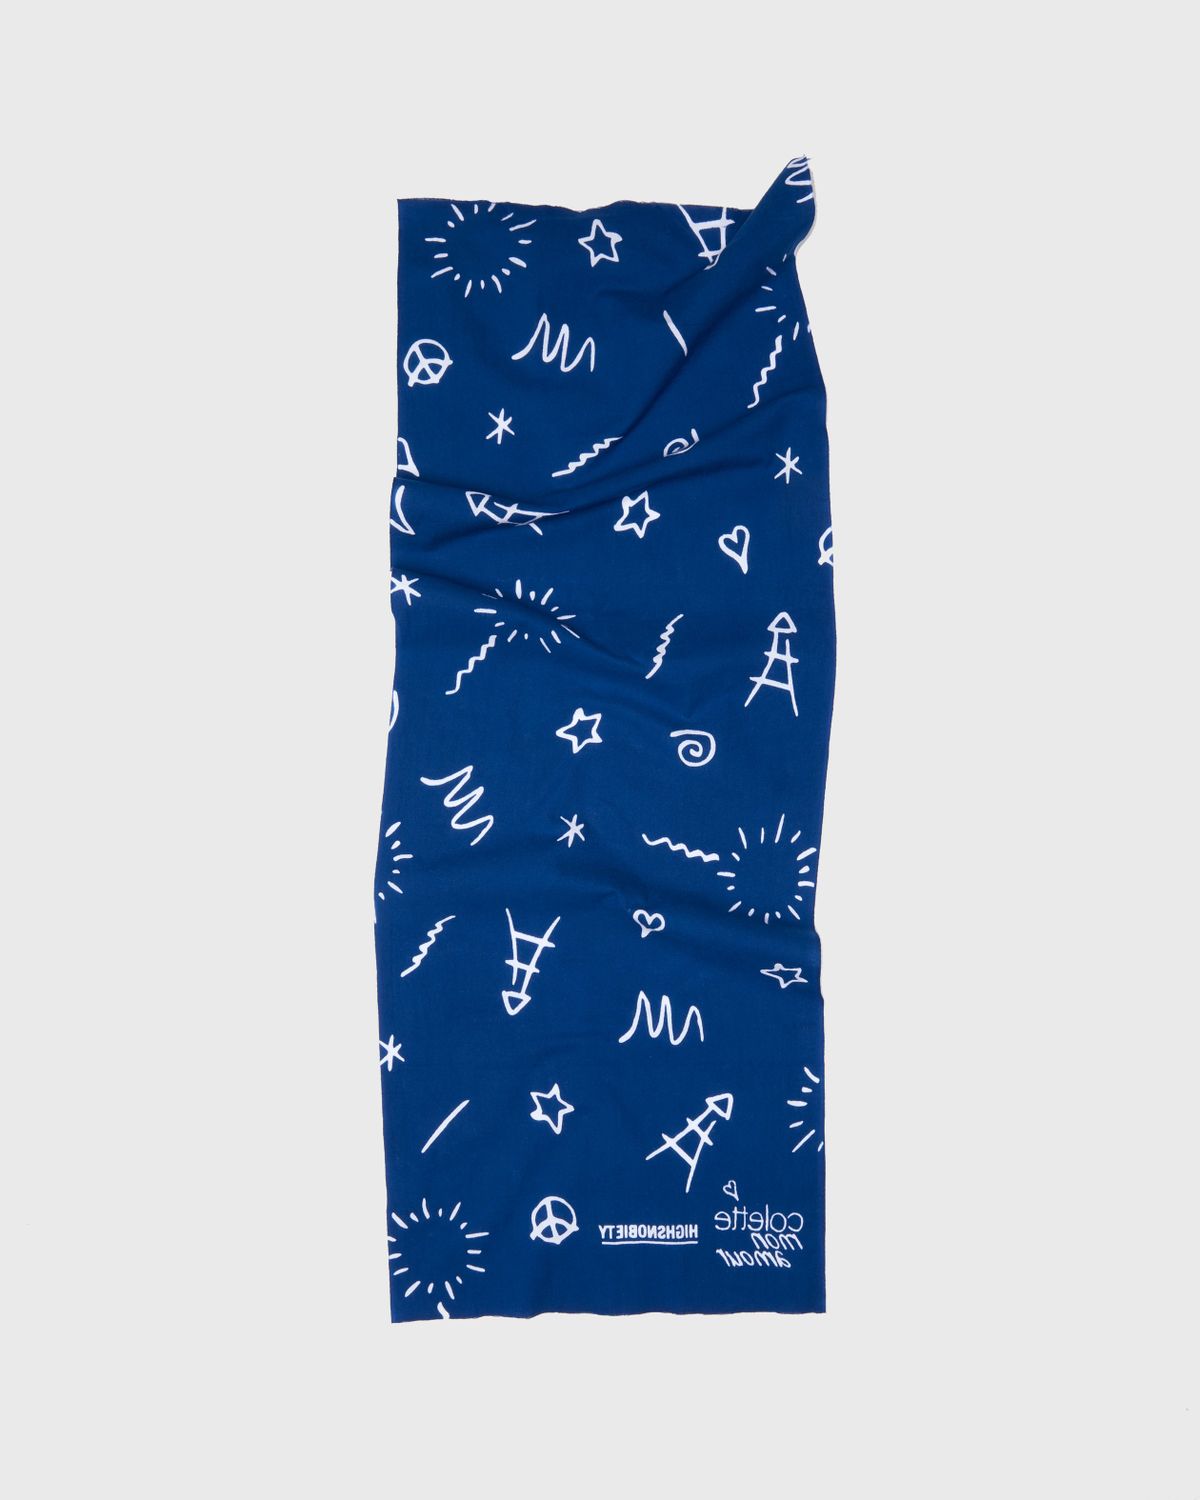 Highsnobiety – Kamawanu x colette Mon Amour Tenugui Blue - Blankets & Throws - Blue - Image 2